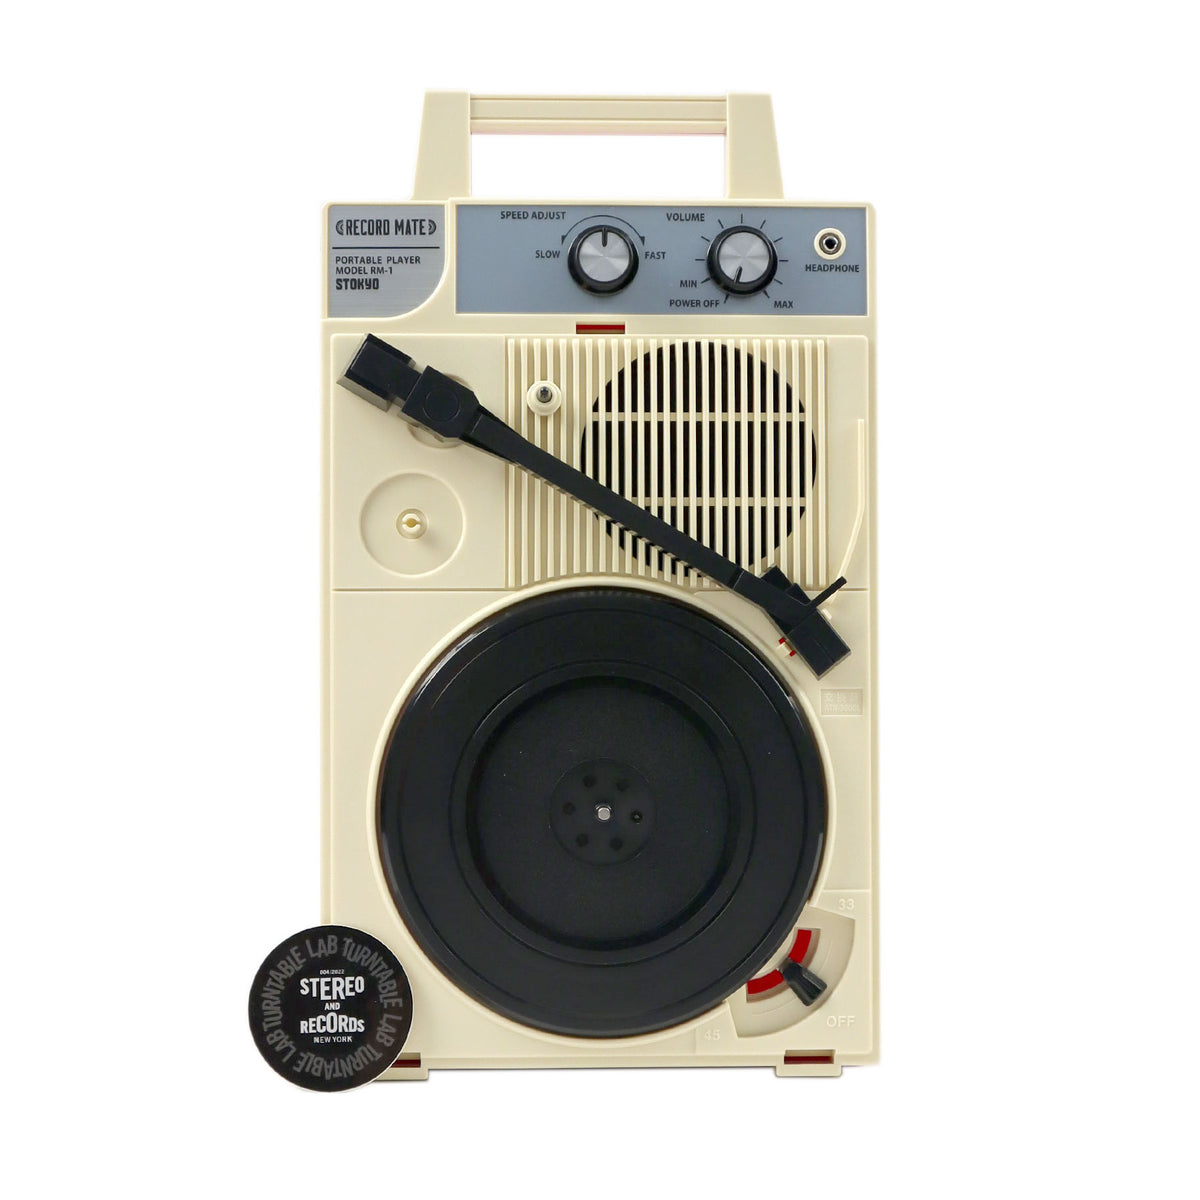 Stokyo: RM-1 / GP-N3R Portable Turntable (Columbia) — TurntableLab.com